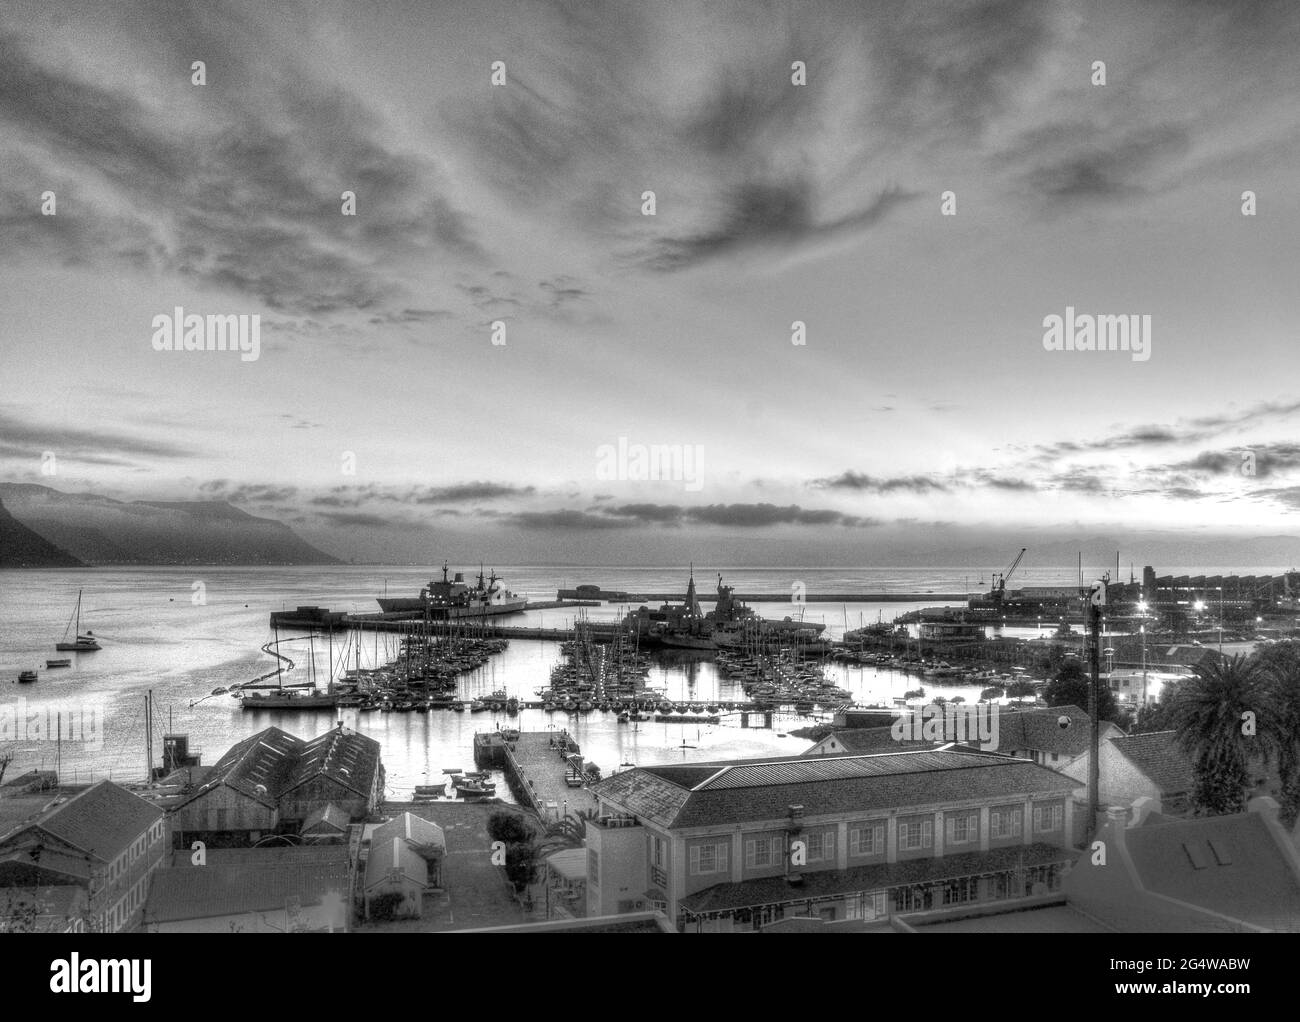 Simon's Town naval base and yacht basin at dawn. Jan 2021 Stock Photo